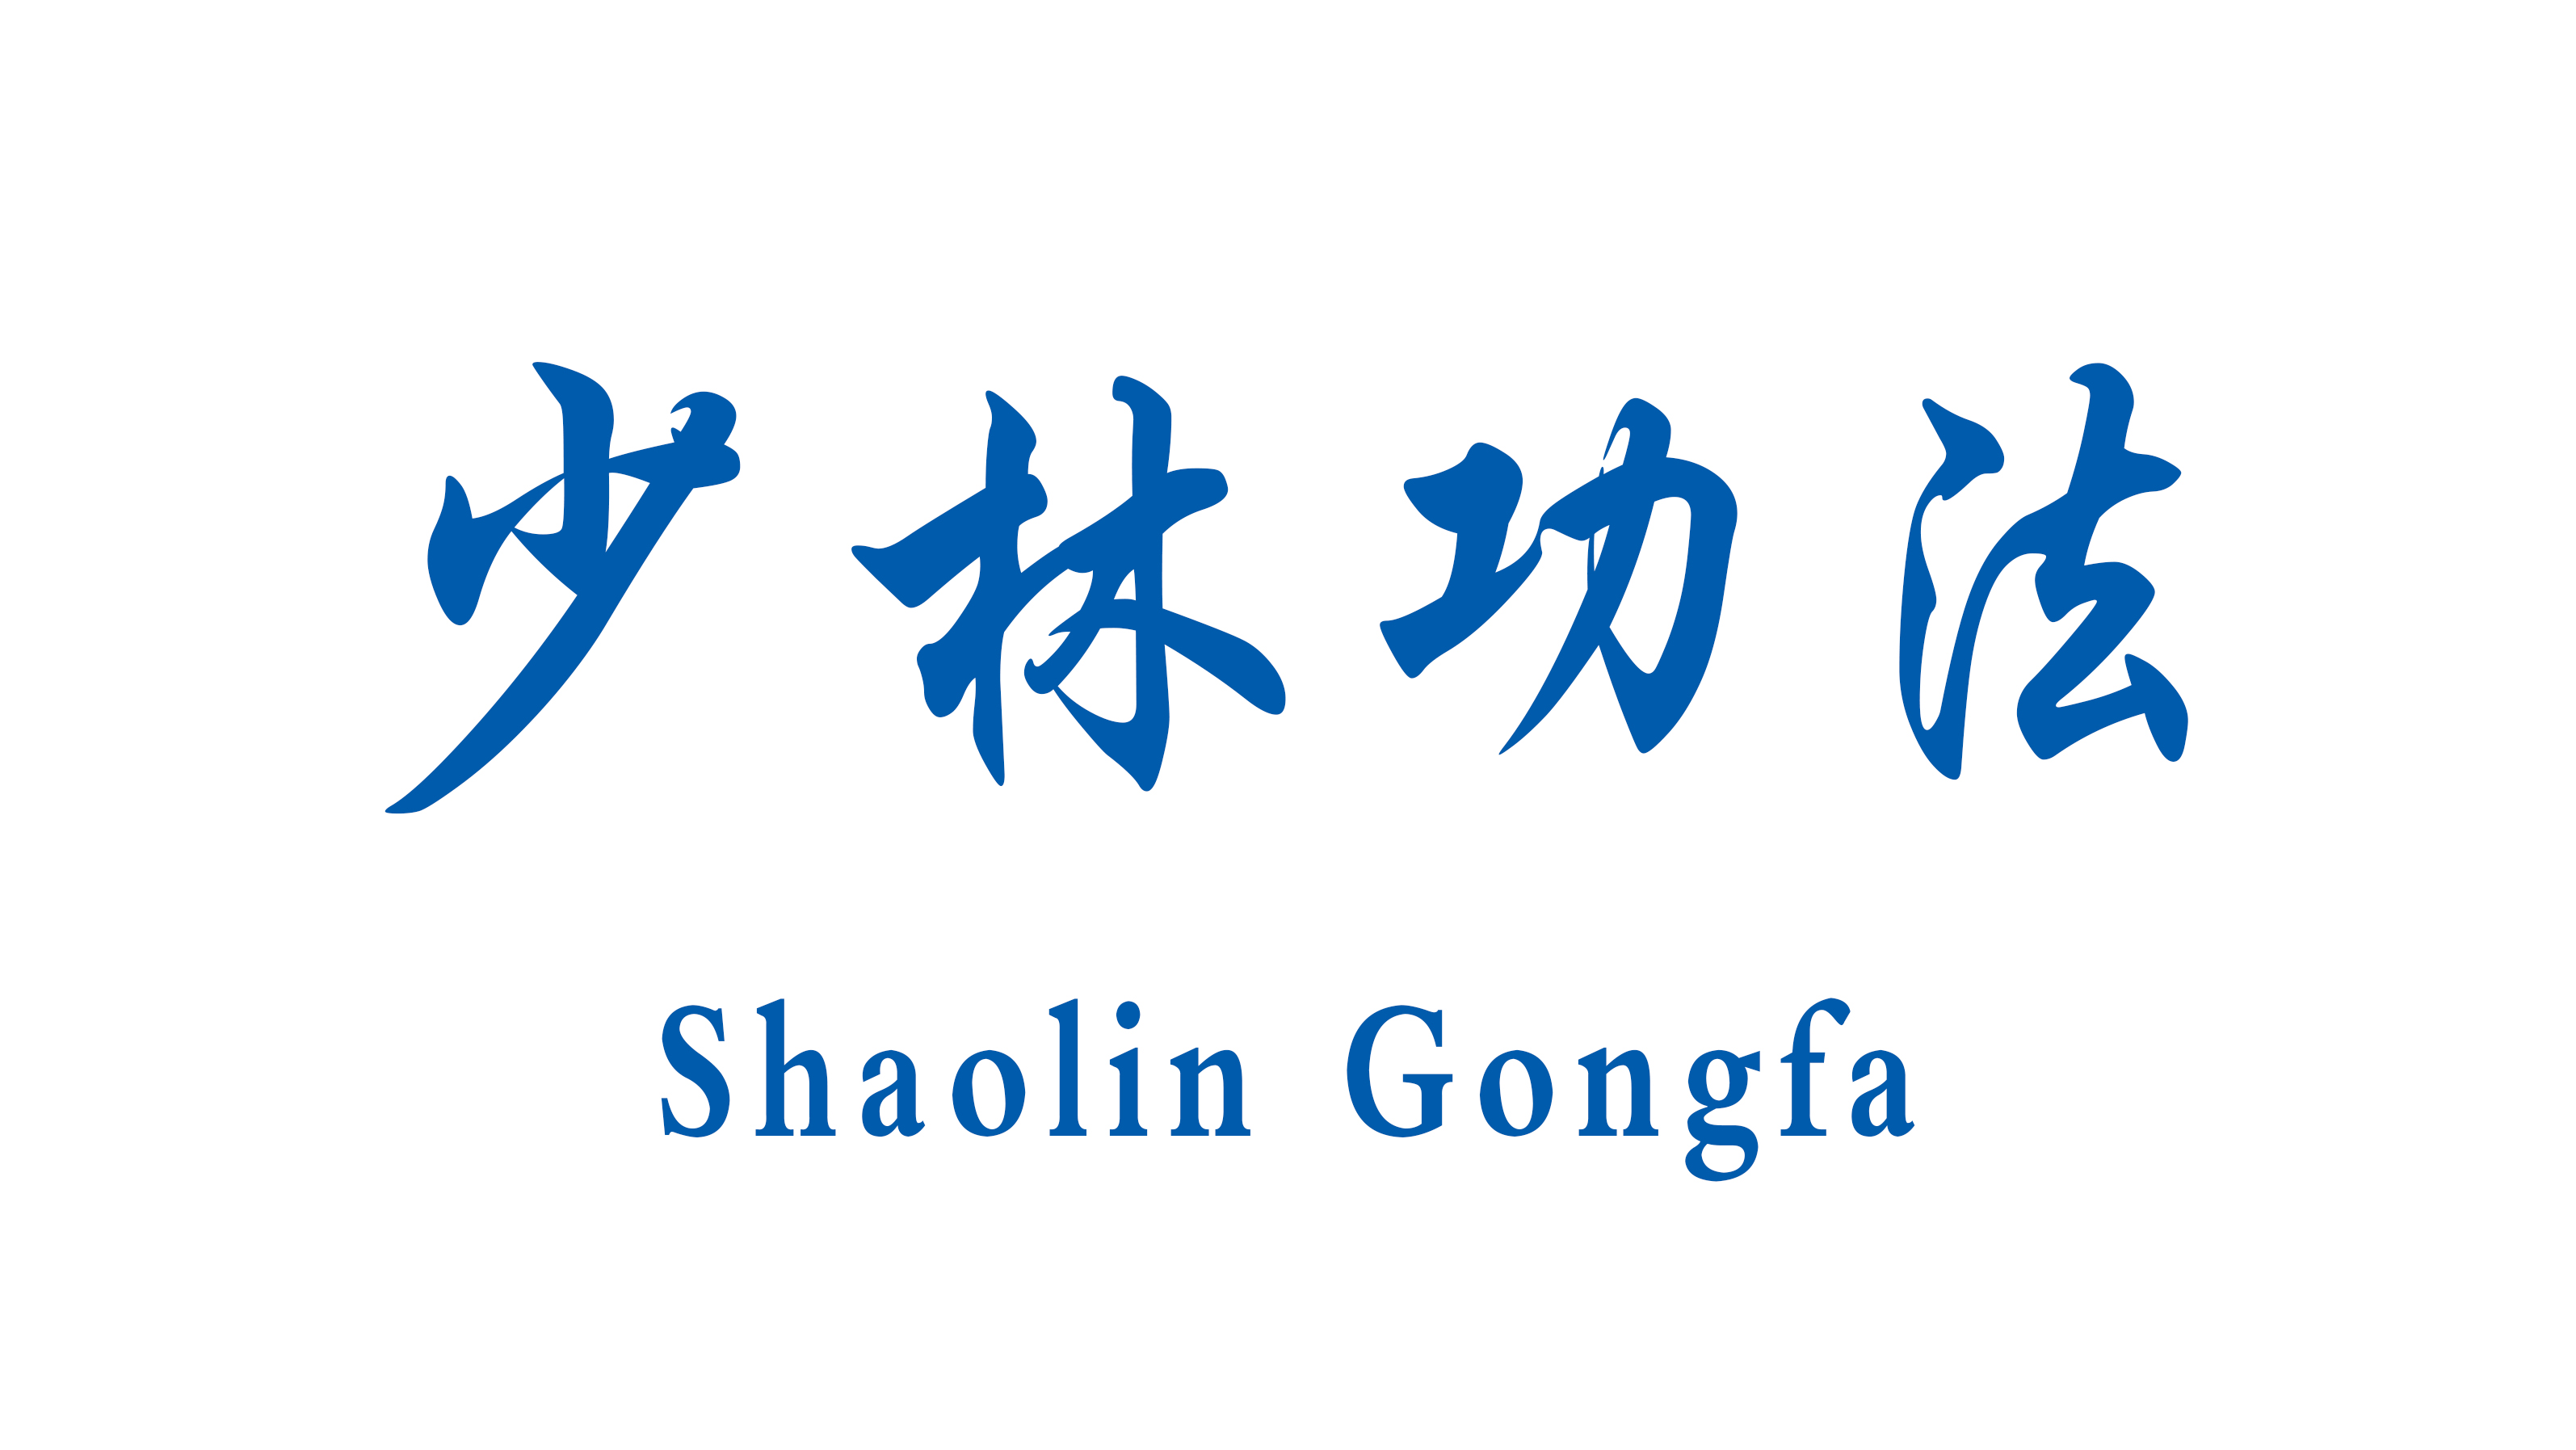 Shaolin Gongfa